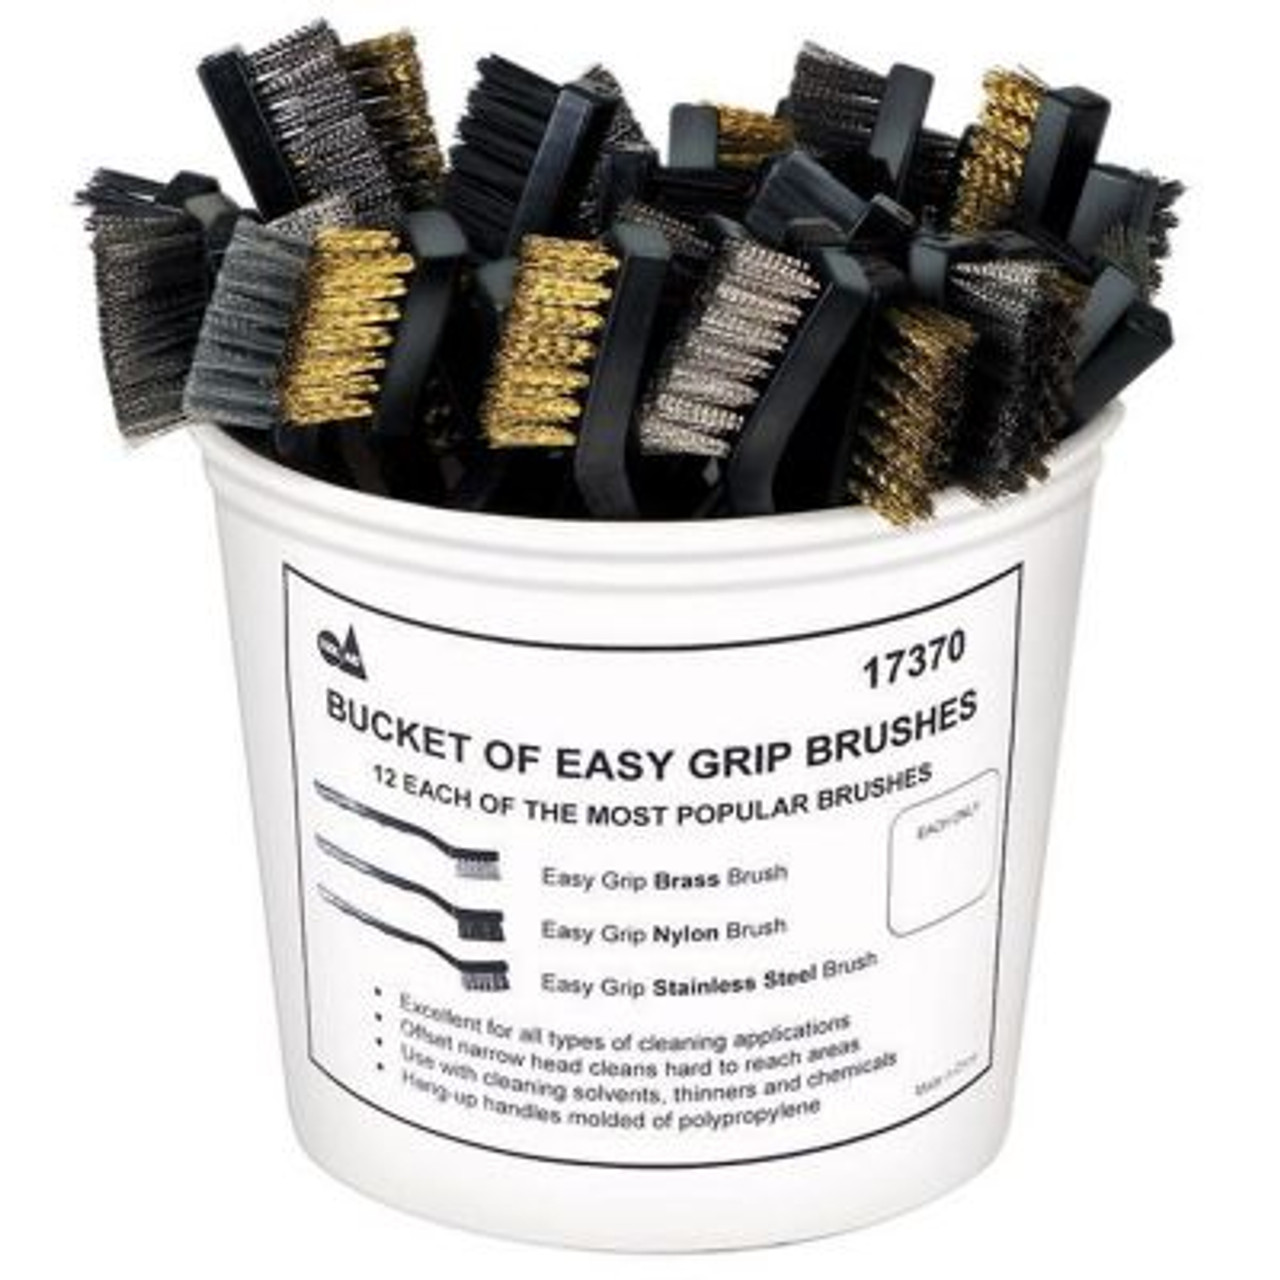 Bucket of Easy Grip Brushes 17370